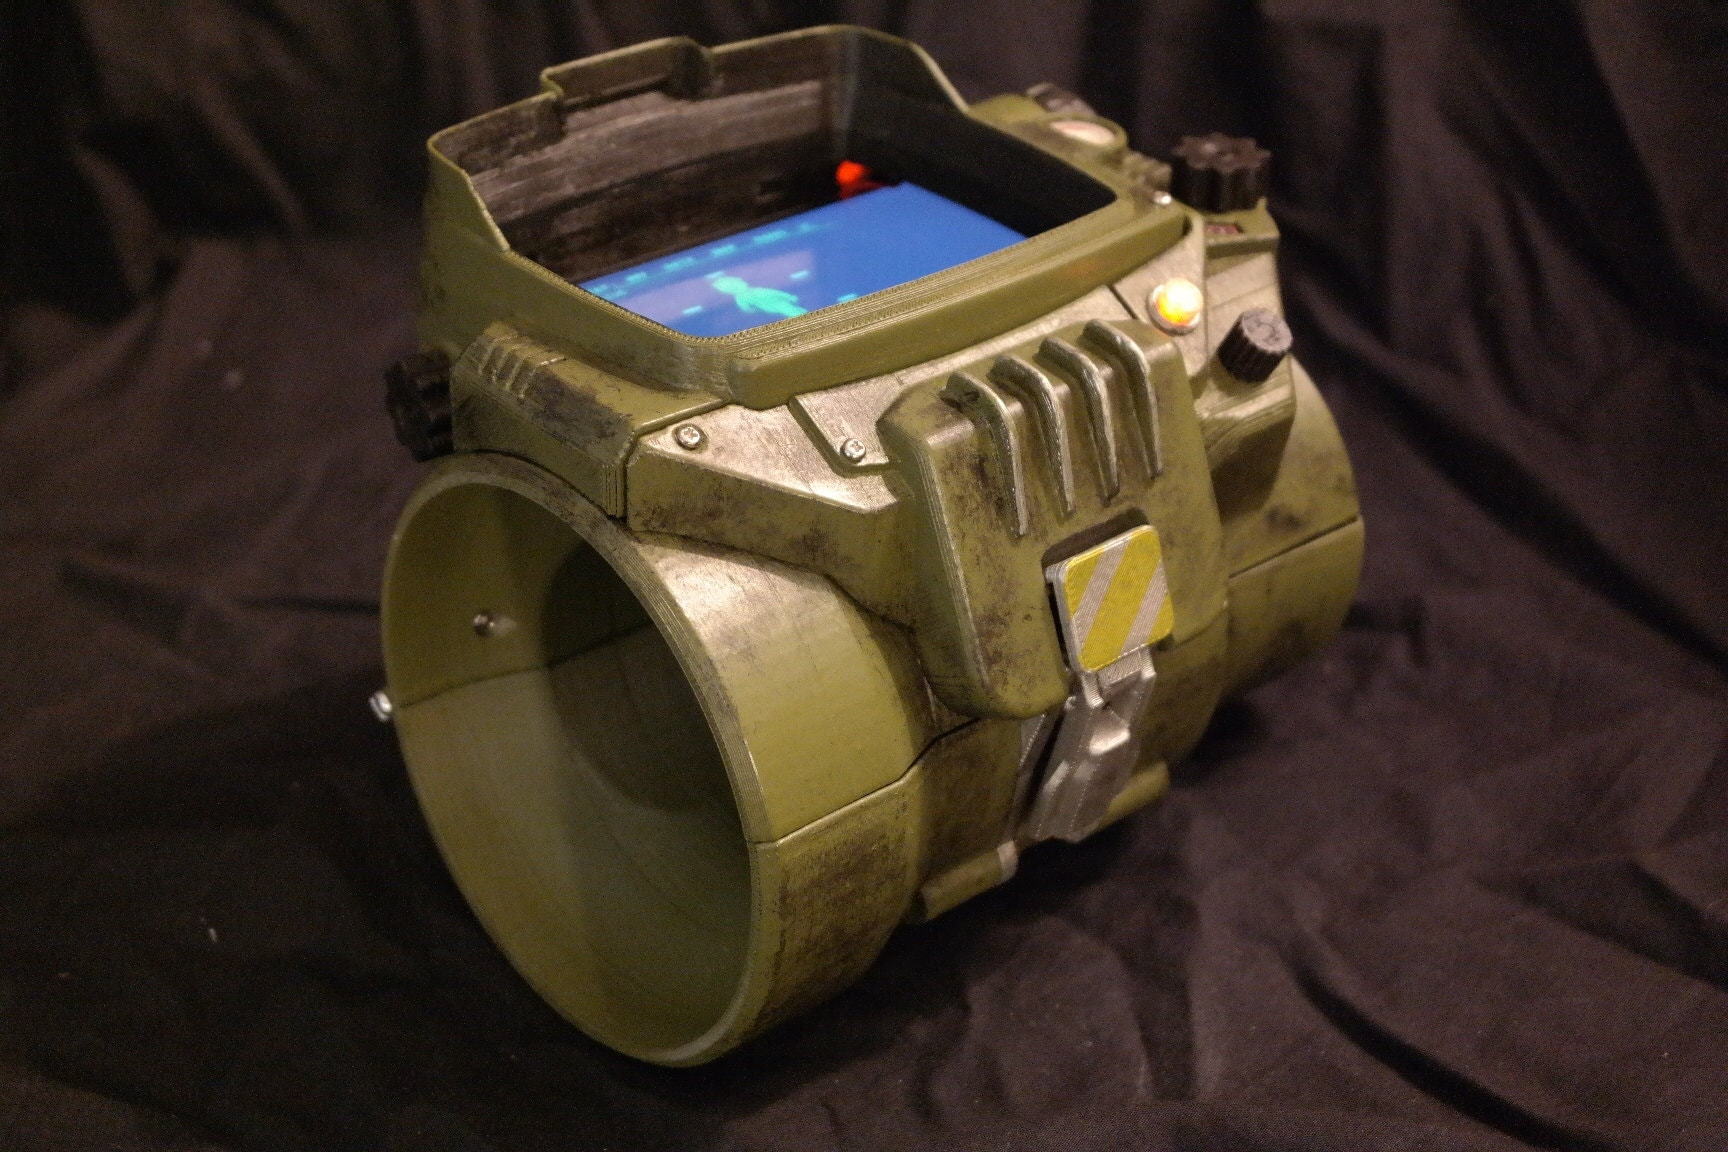 Fallout Gadget 